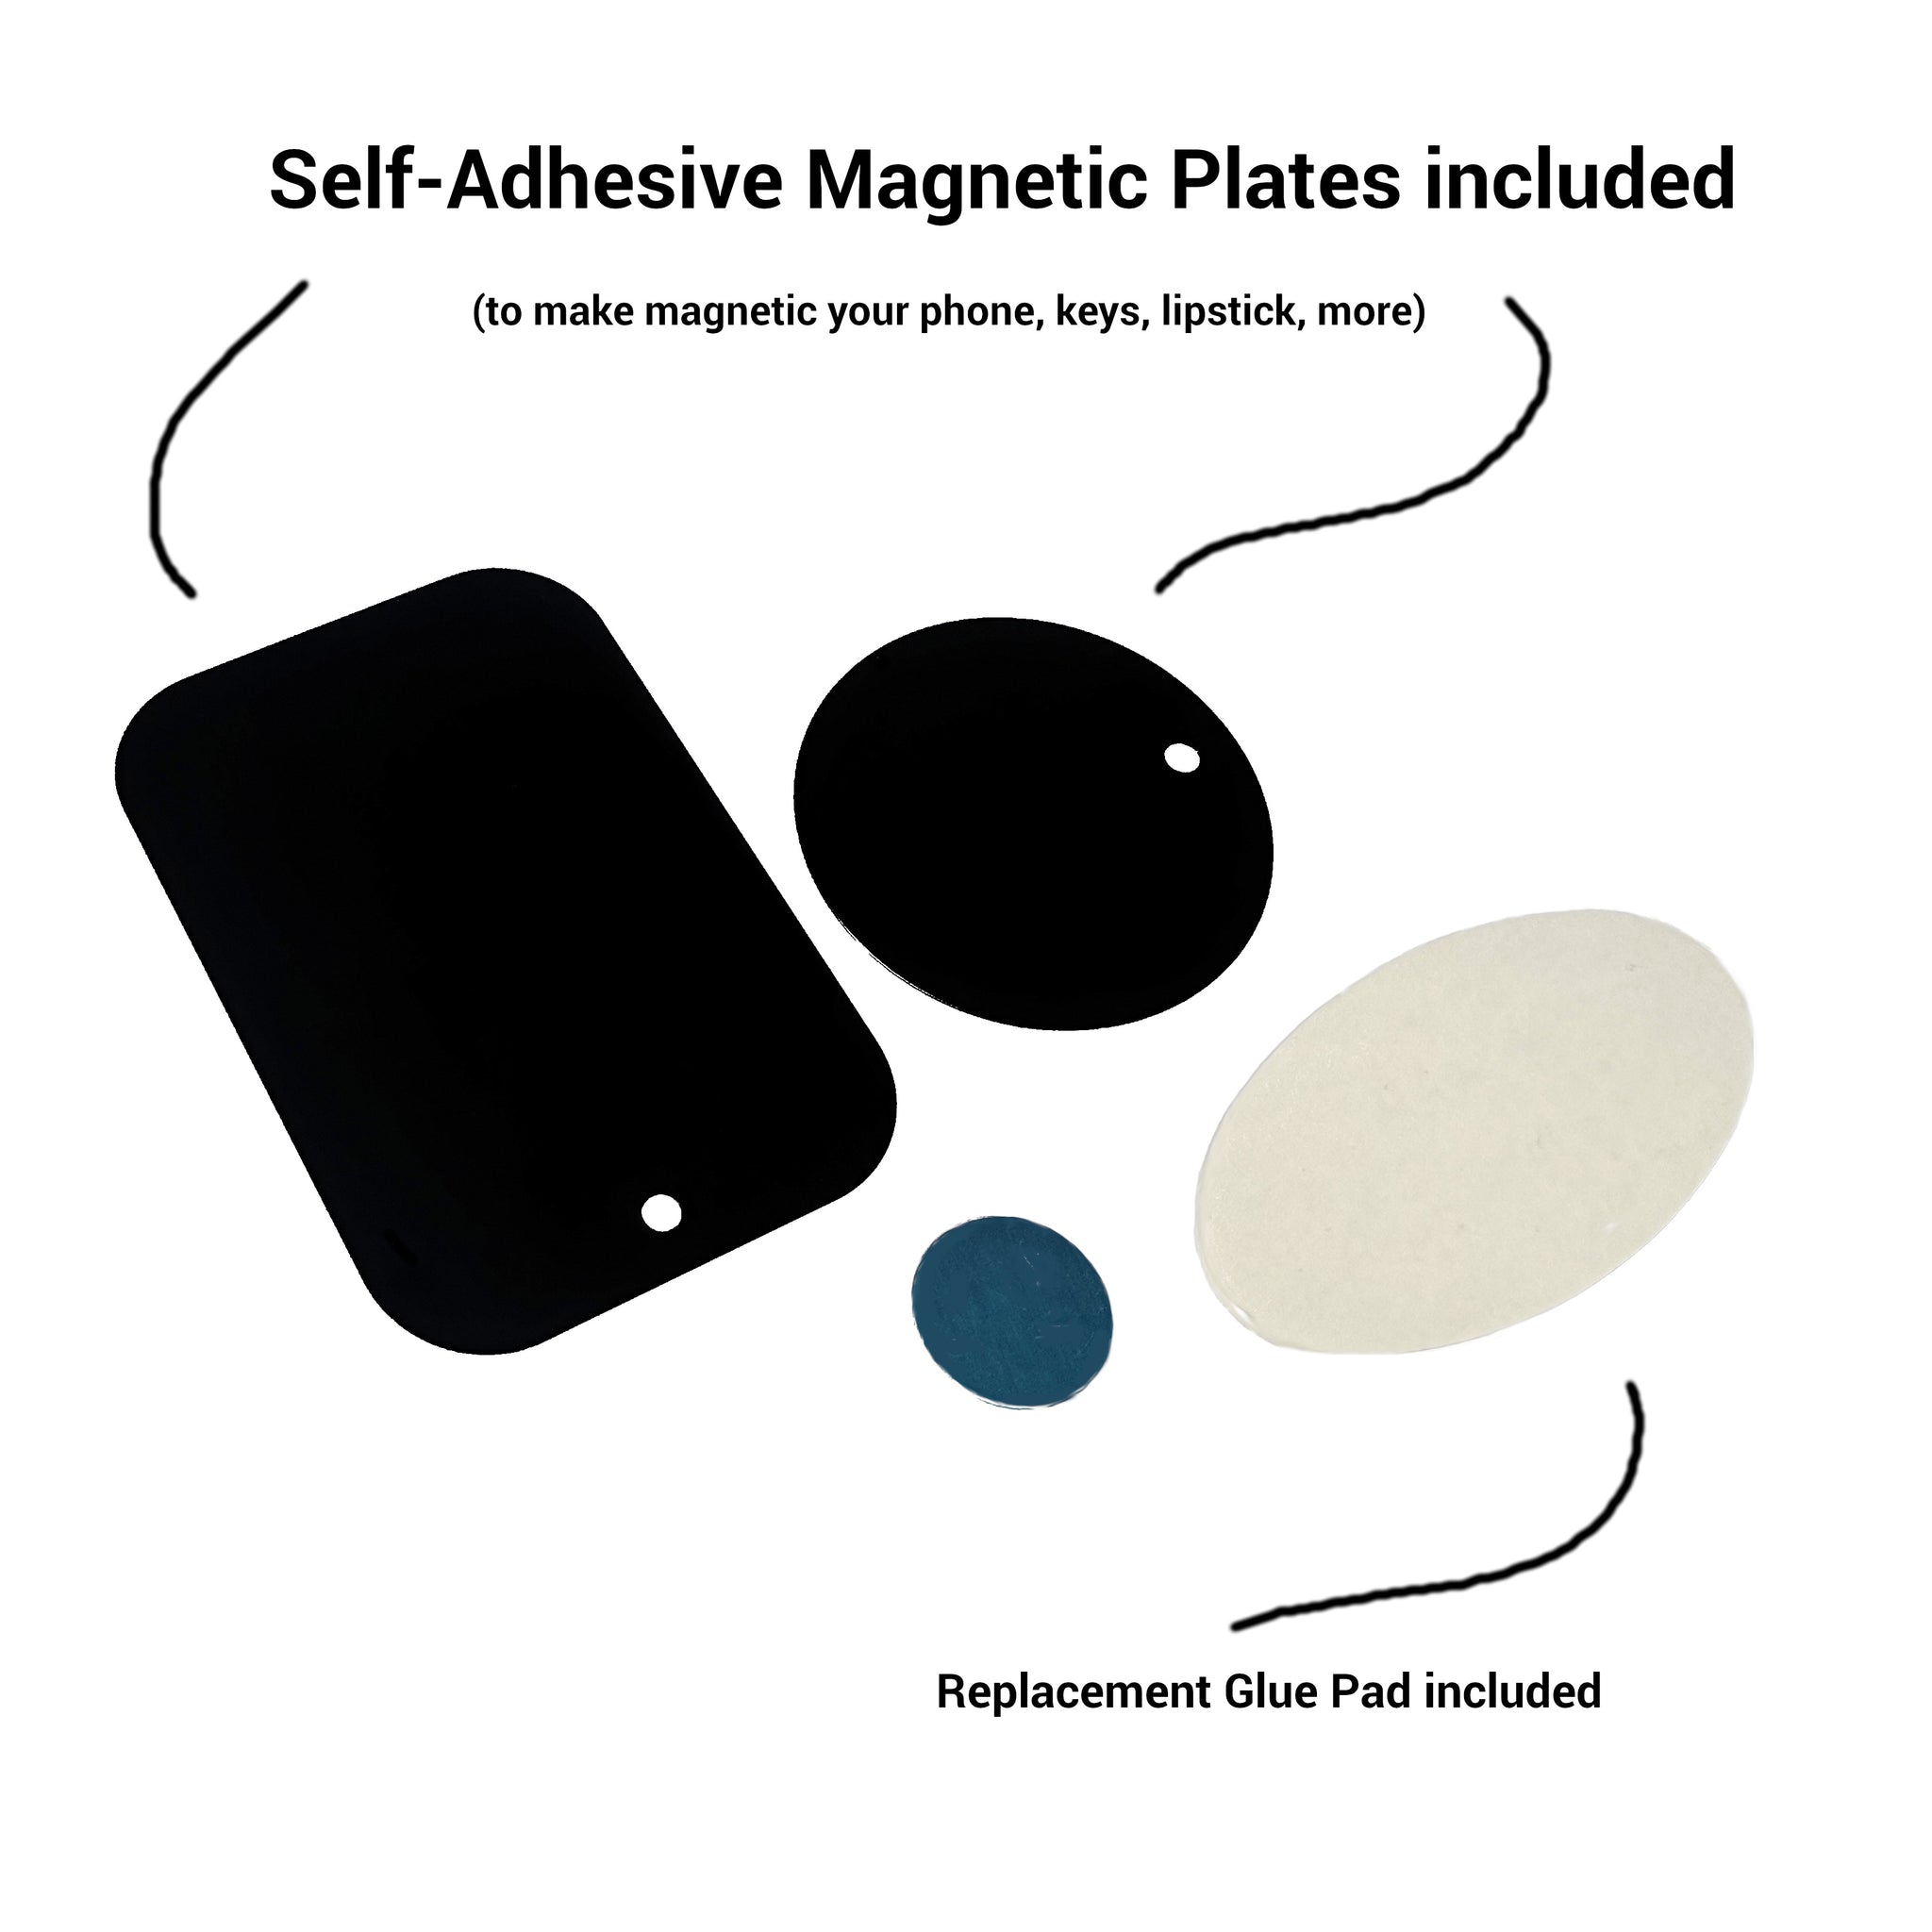 Magnetic Phone Holder | For Handbag, Car, Home, Office | Red Tartan Design